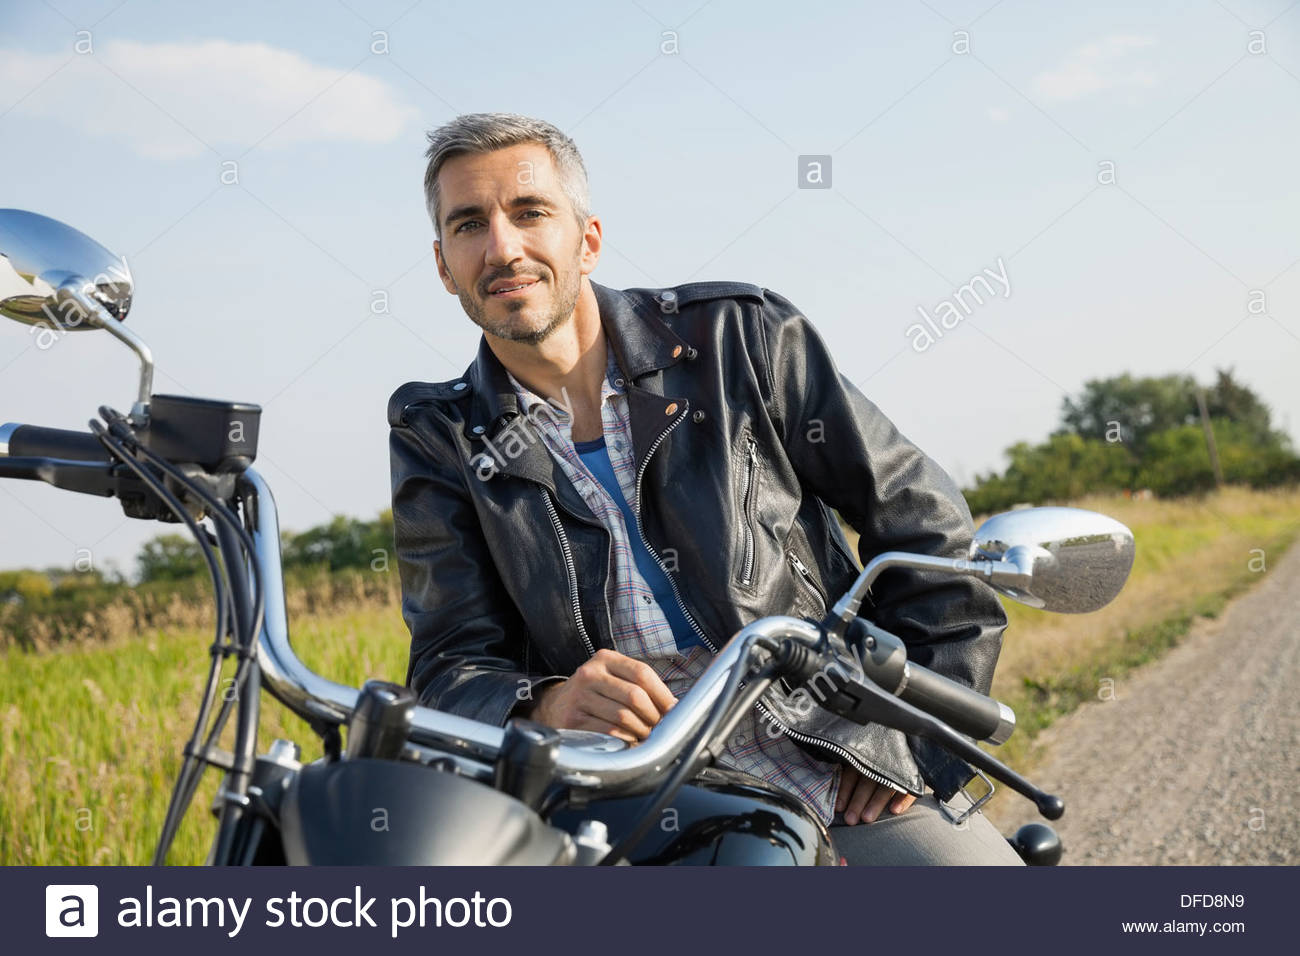 Portrait of biker sitting on motorcycle Banque D'Images